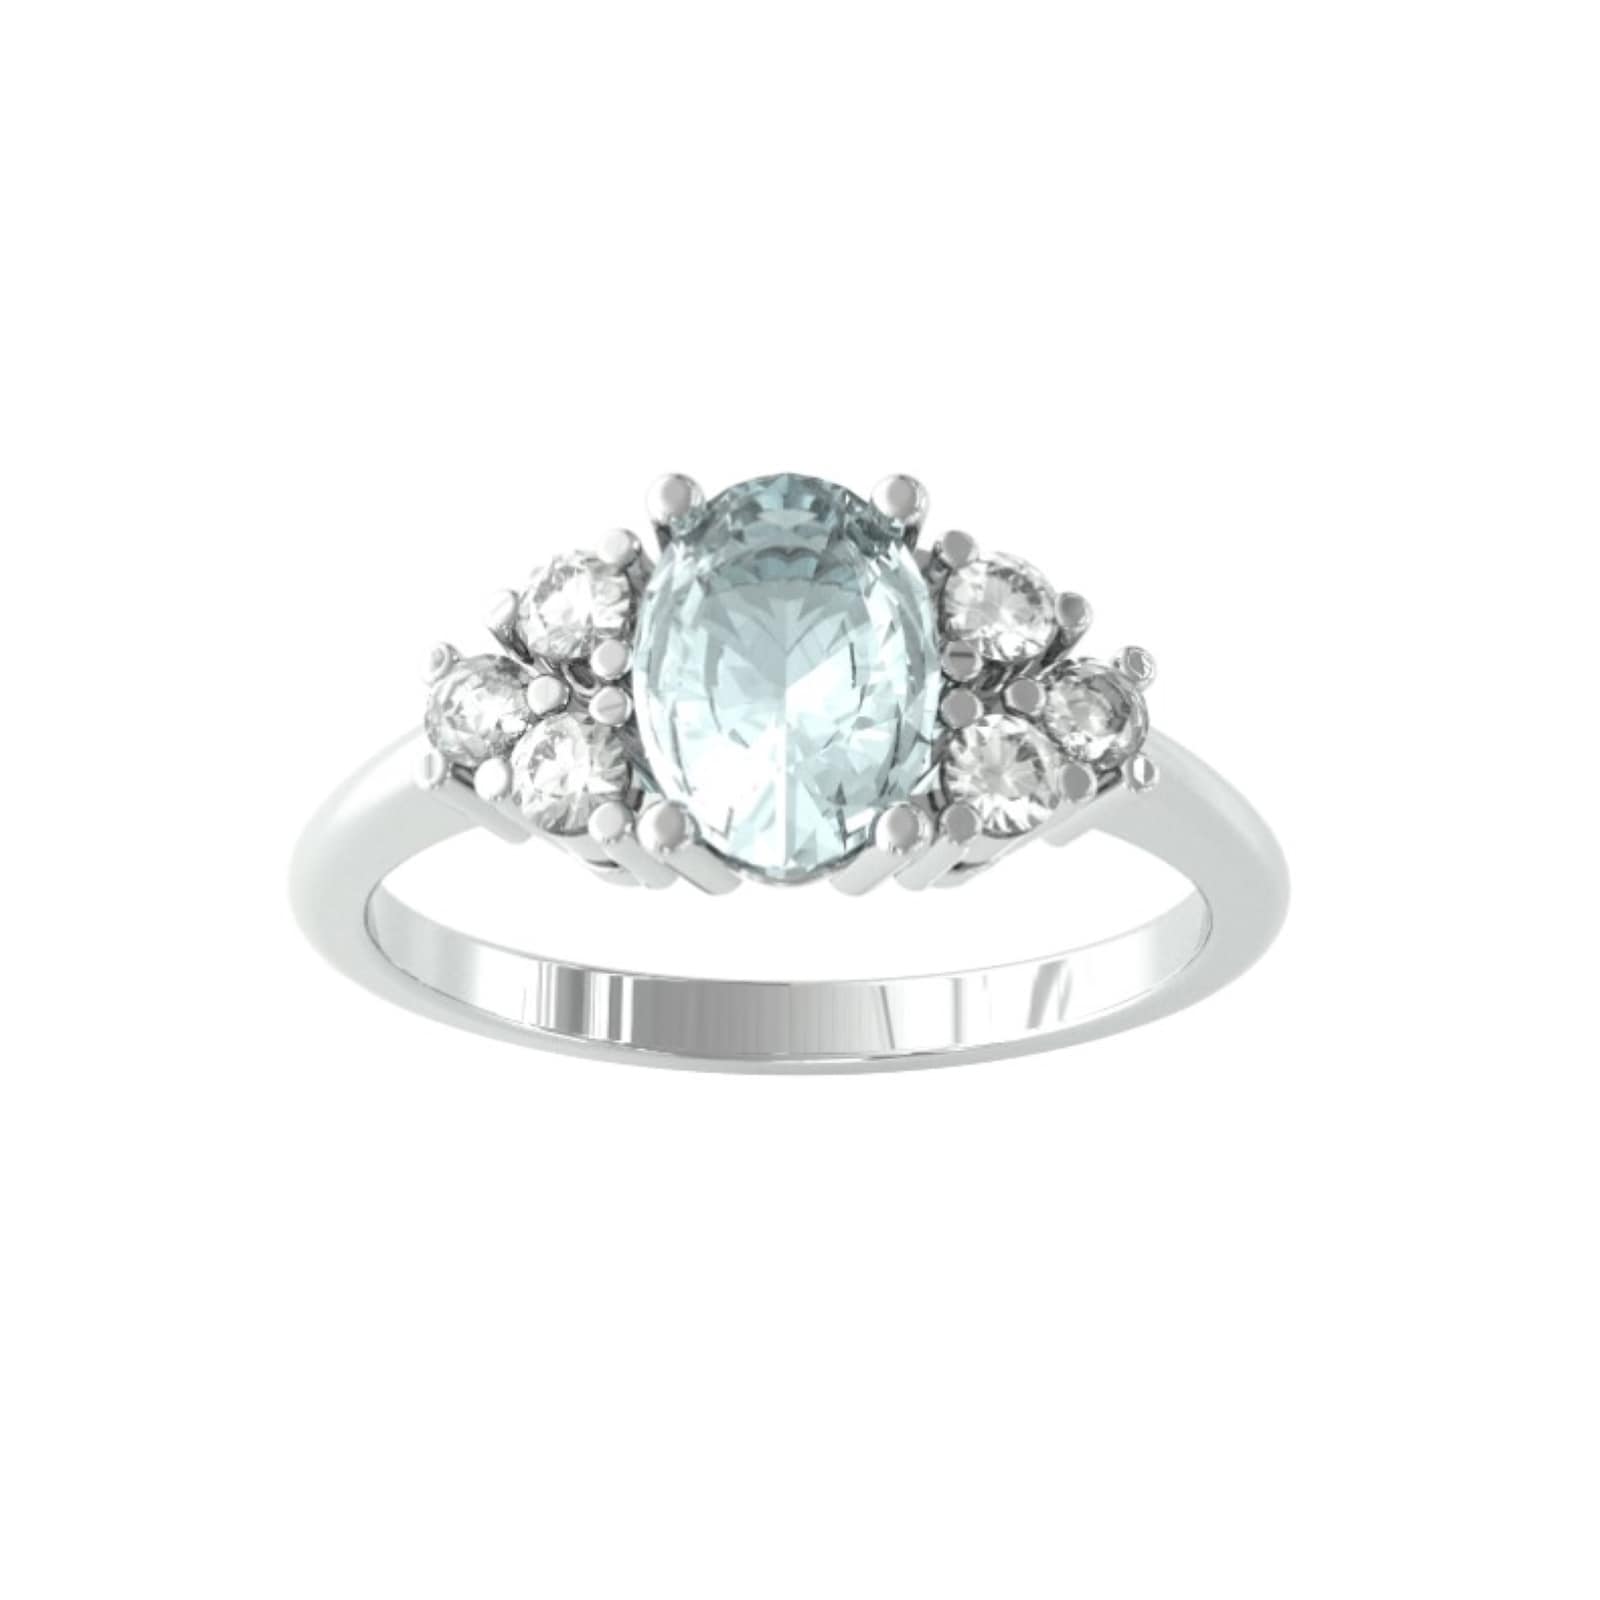 9ct White Gold Aquamarine and Brilliant Cut Diamond Ring - Ring Size N